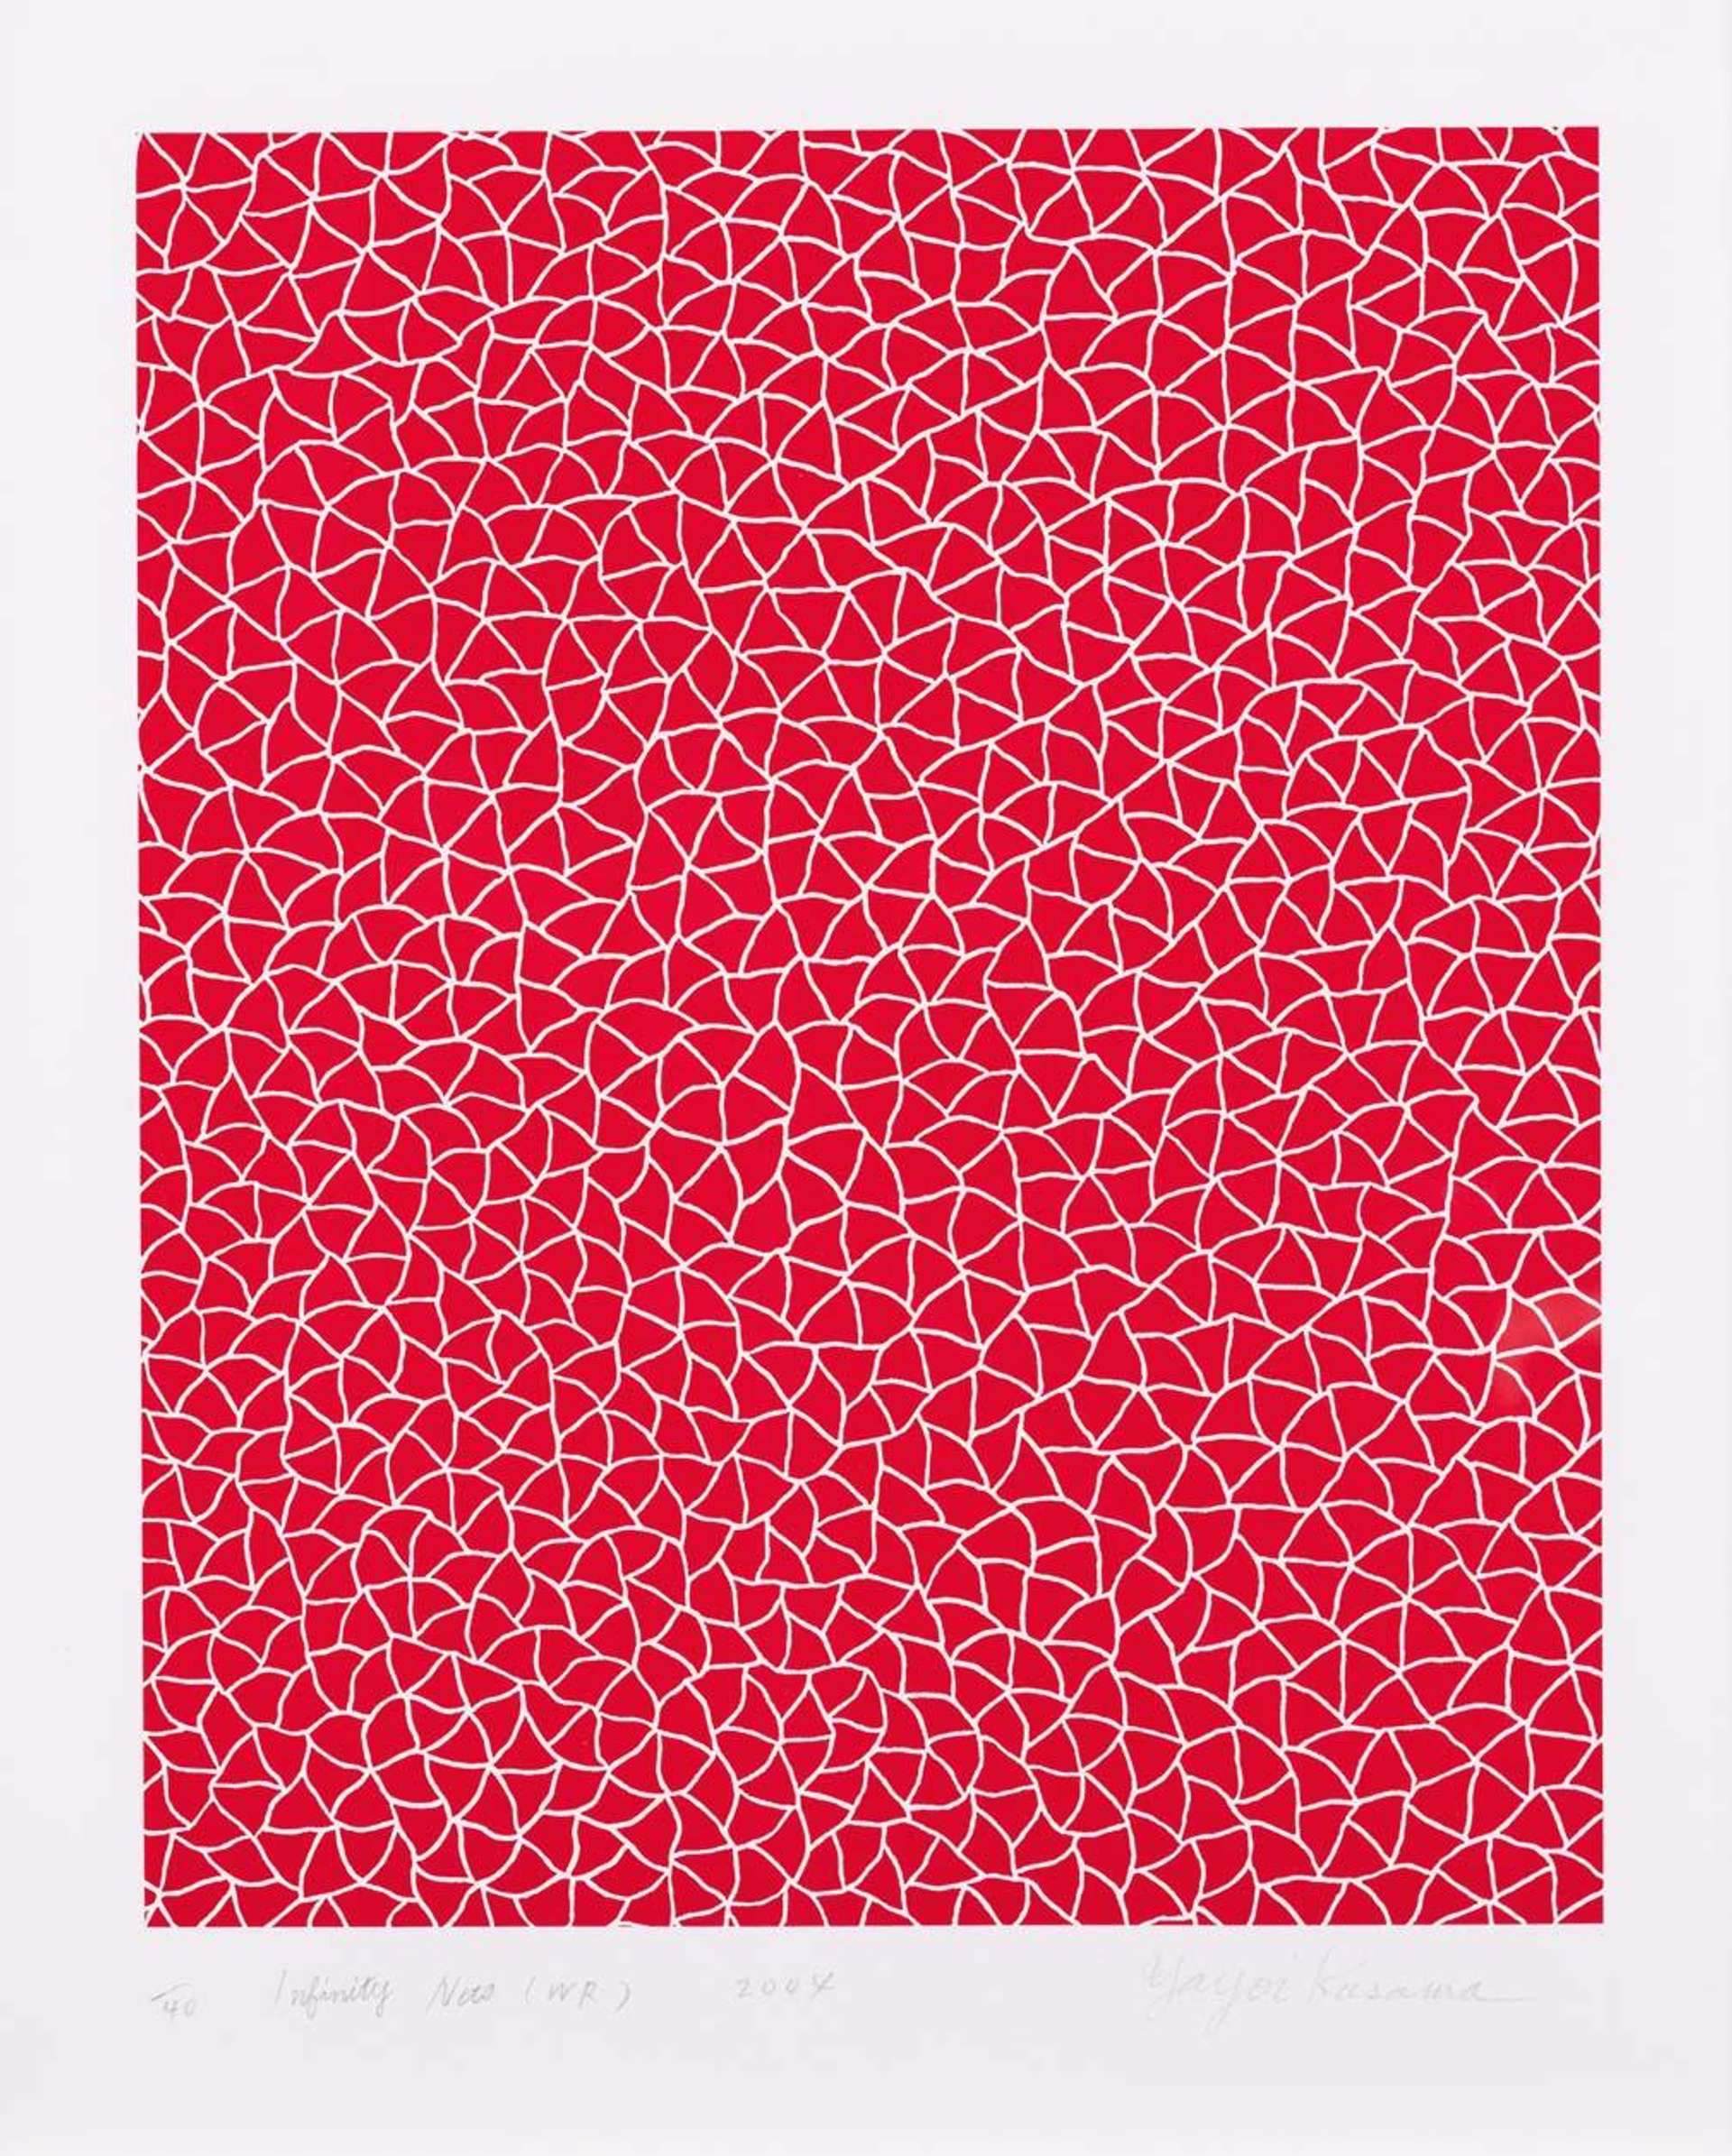 Yayomi Kusama's Infinity Nets (WR). A screenprint of a white, geometric pattern over a red background. 